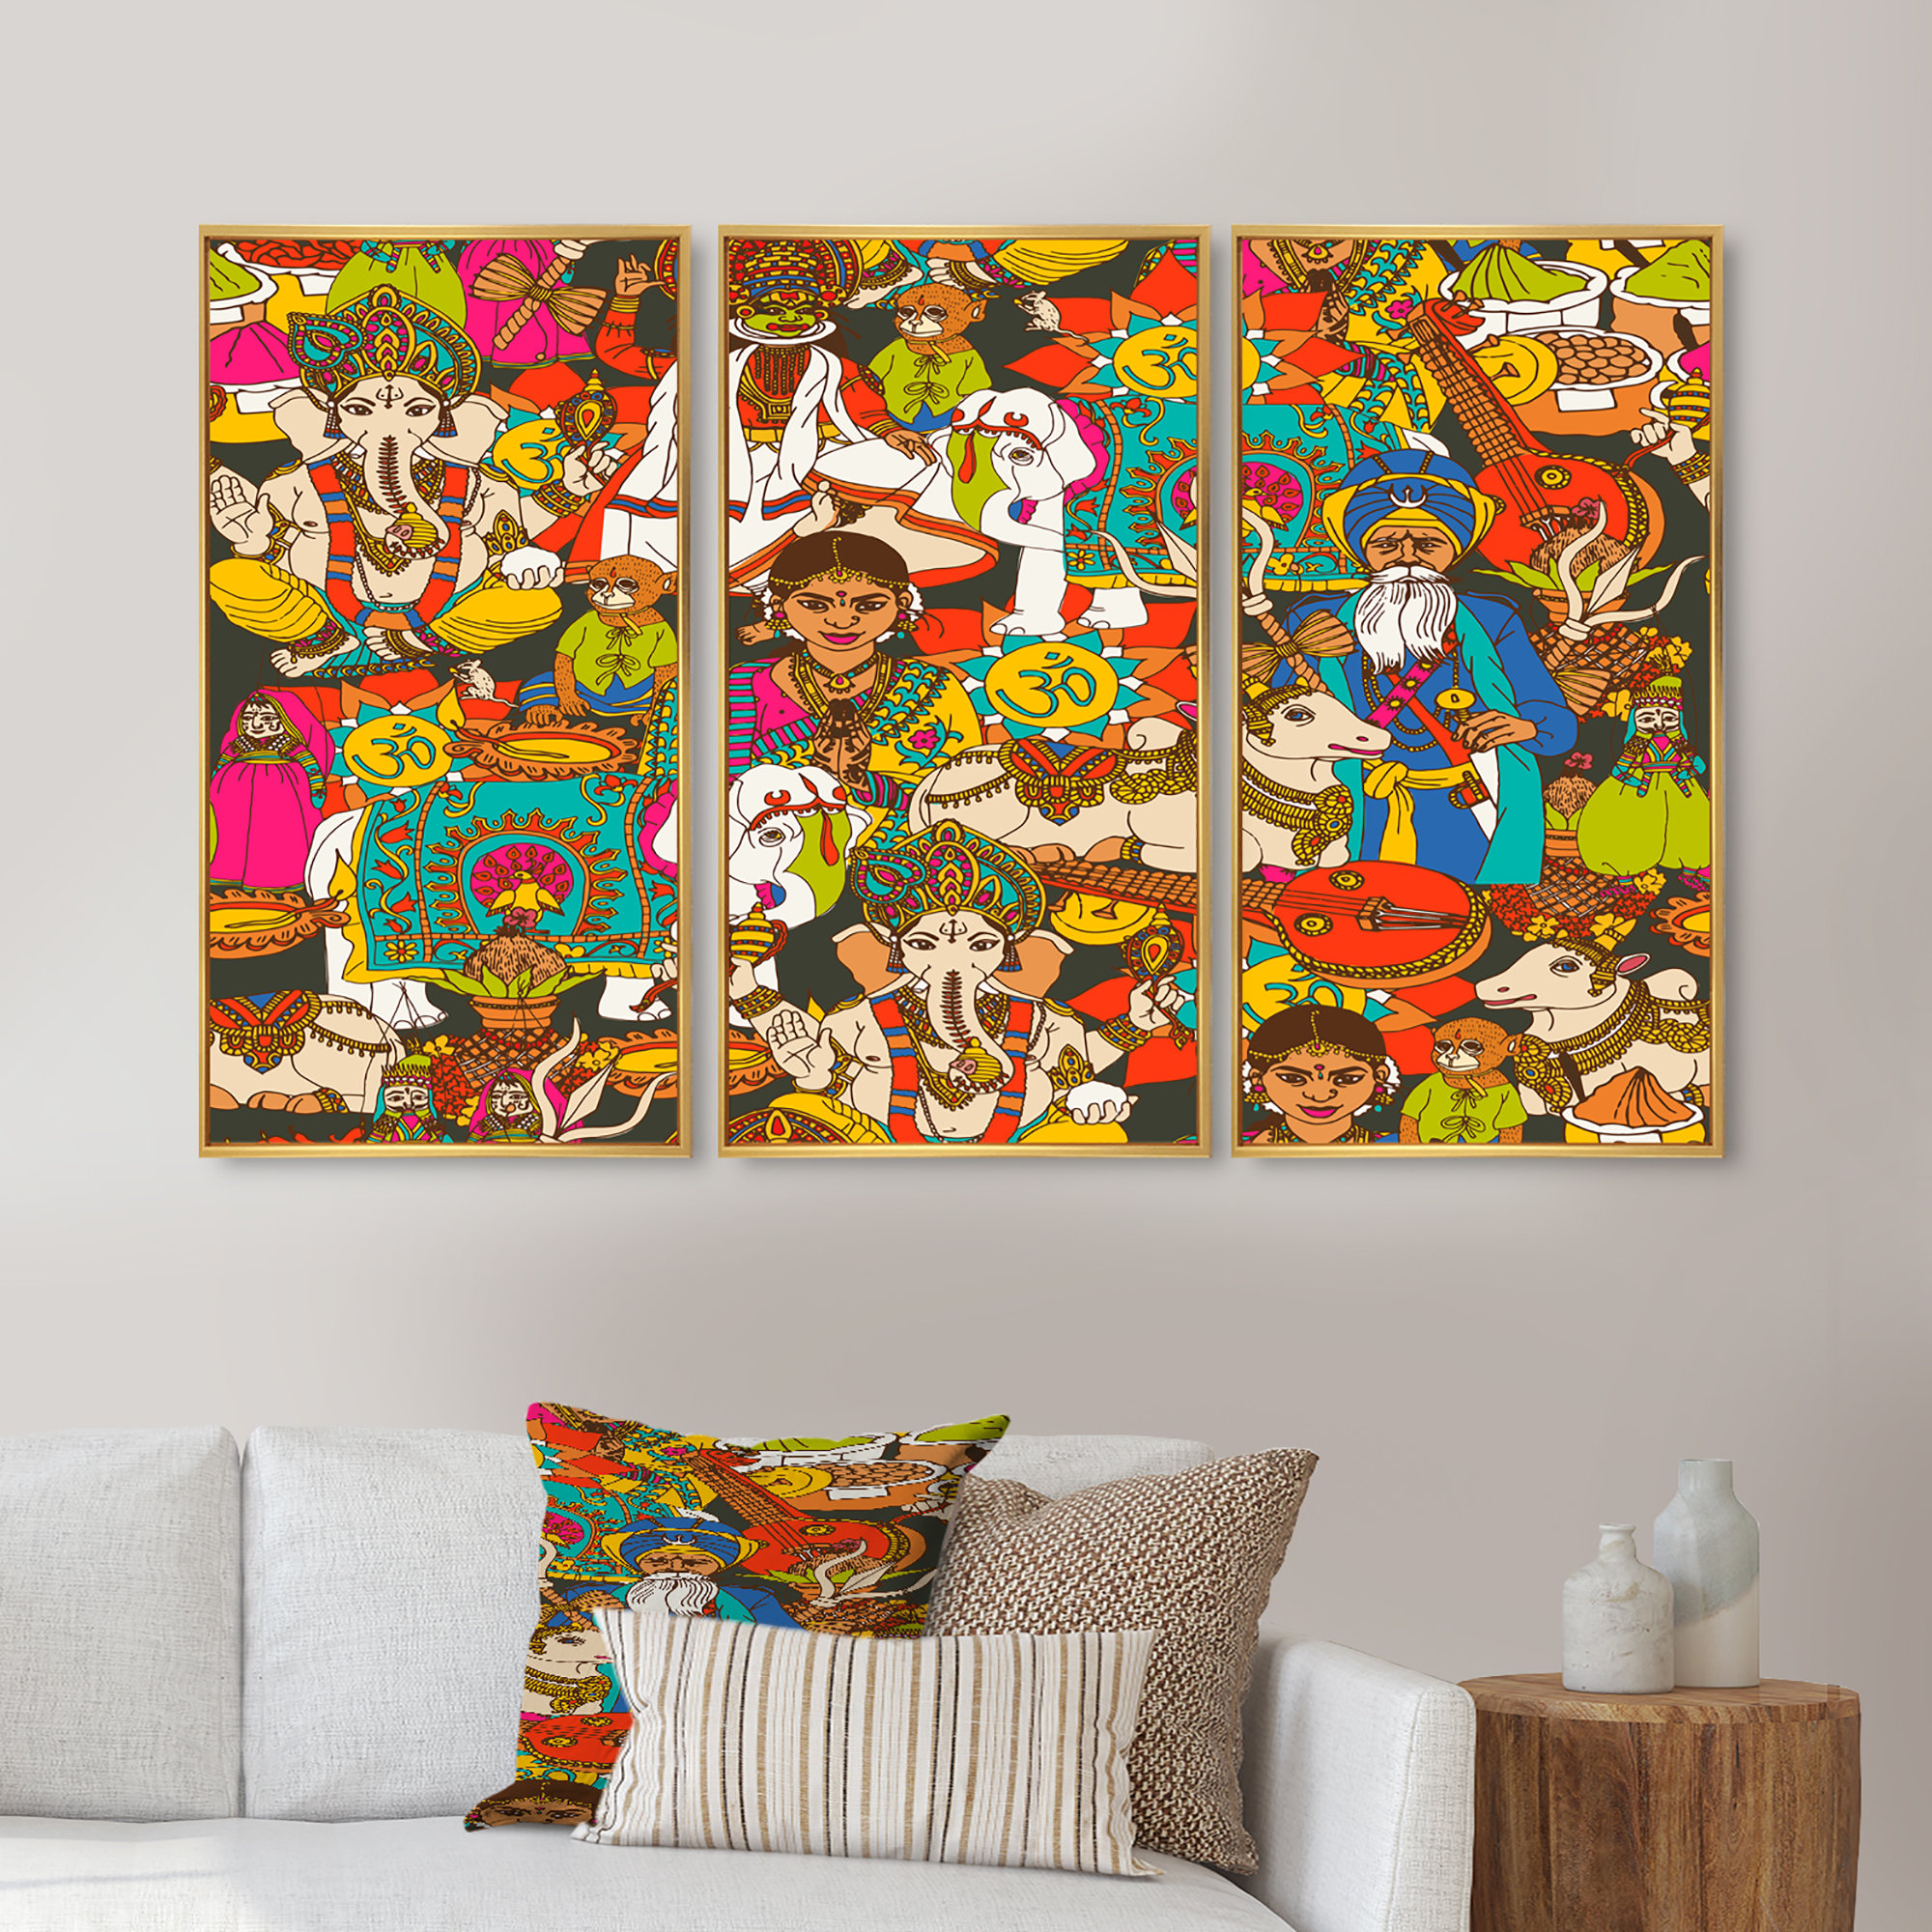 Black Indian Mandala Pattern Boho Geometric Abstract Chic Wall Art Framed  On Canvas 3 Pieces Print